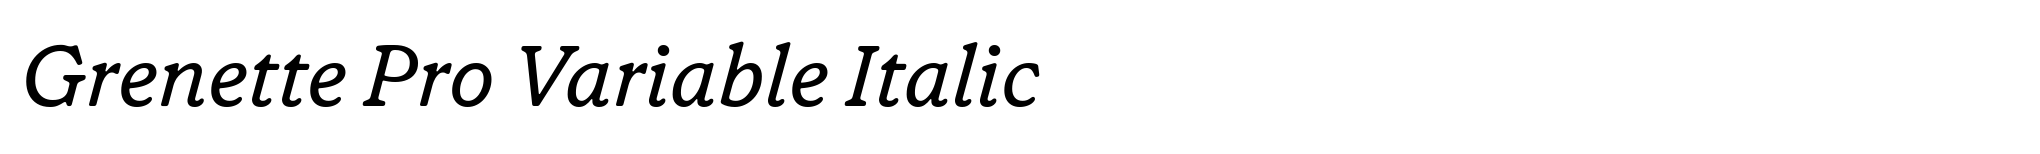 Grenette Pro Variable Italic image